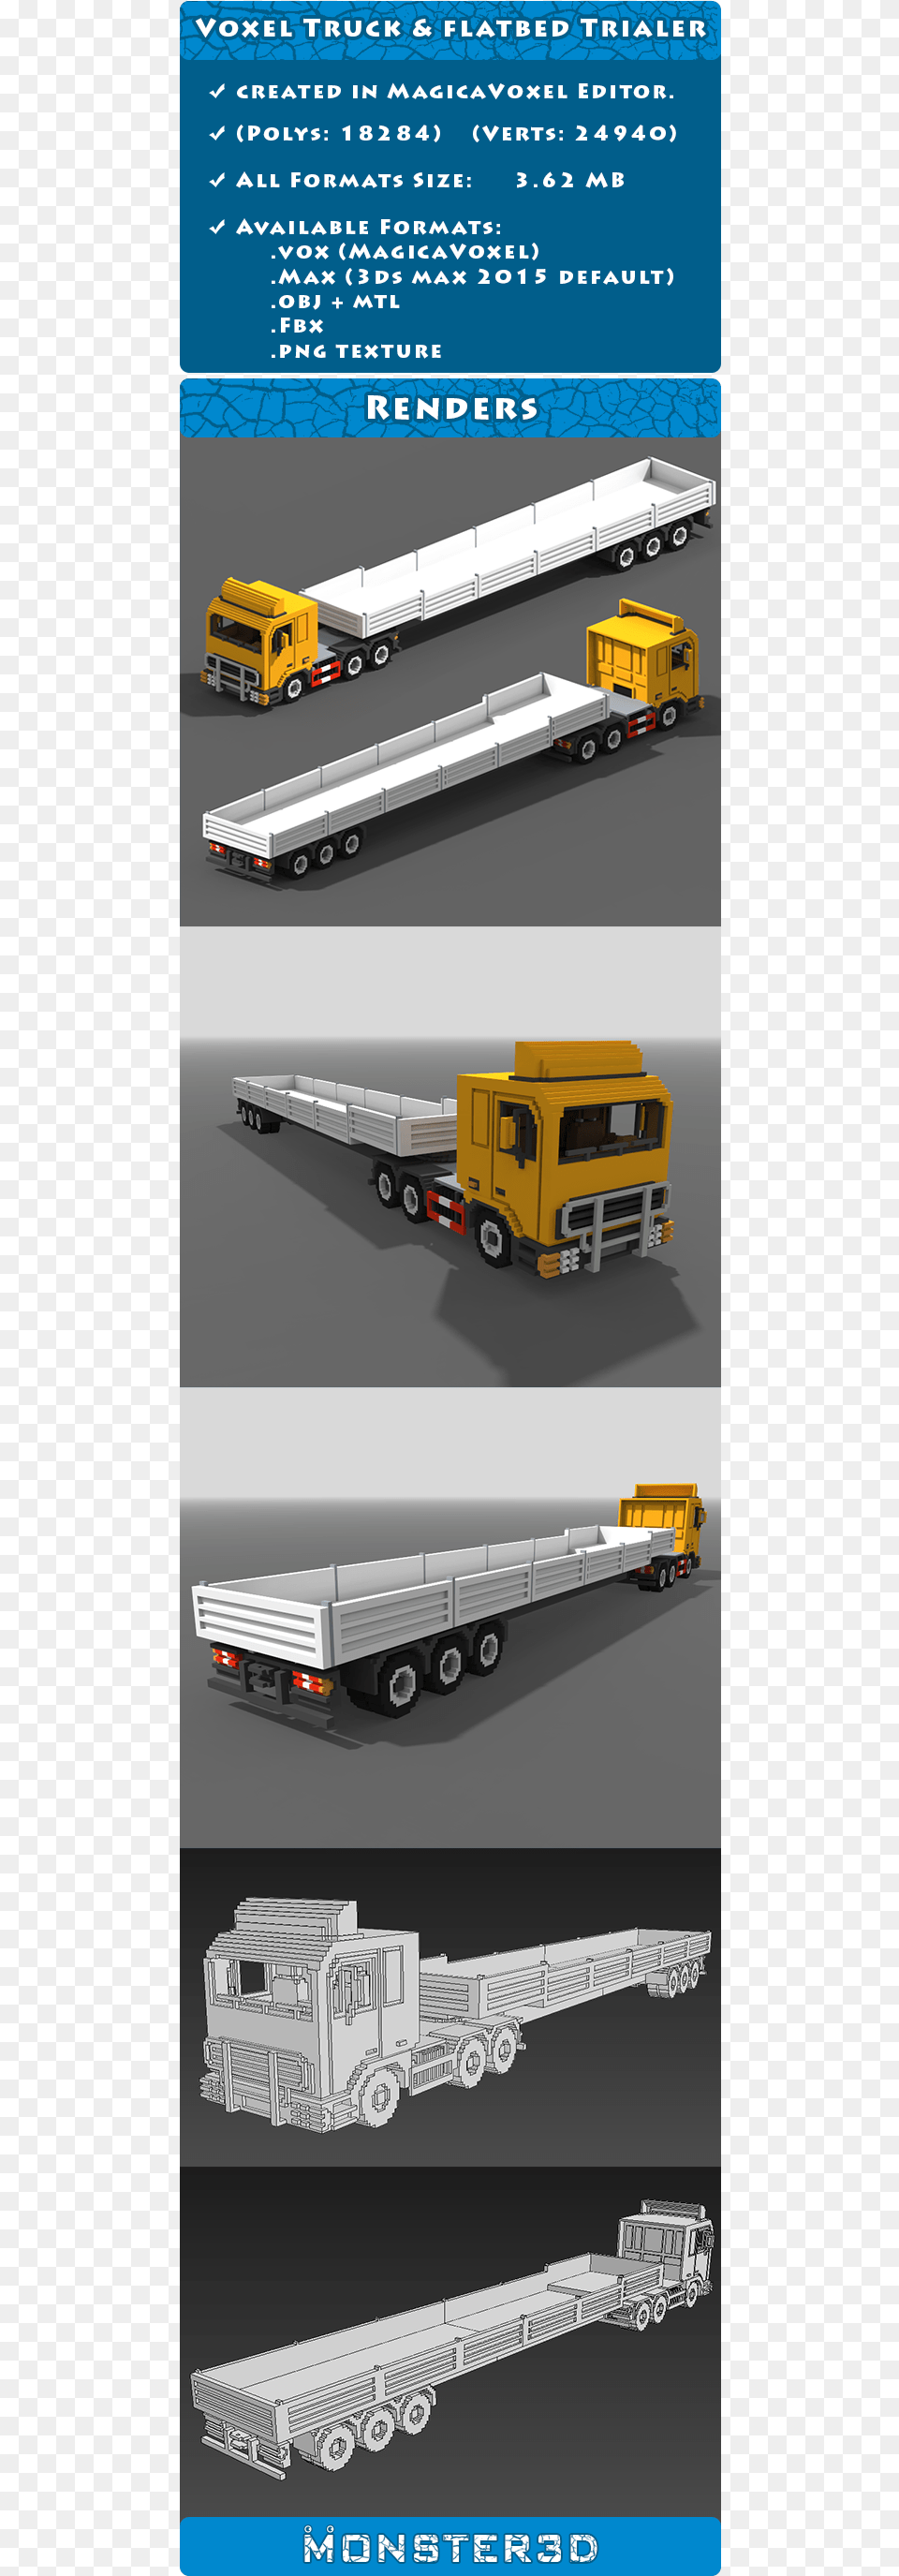 Voxel Truck Amp Flatbed Trailer Trailer Truck, Trailer Truck, Transportation, Vehicle, Construction Free Png Download